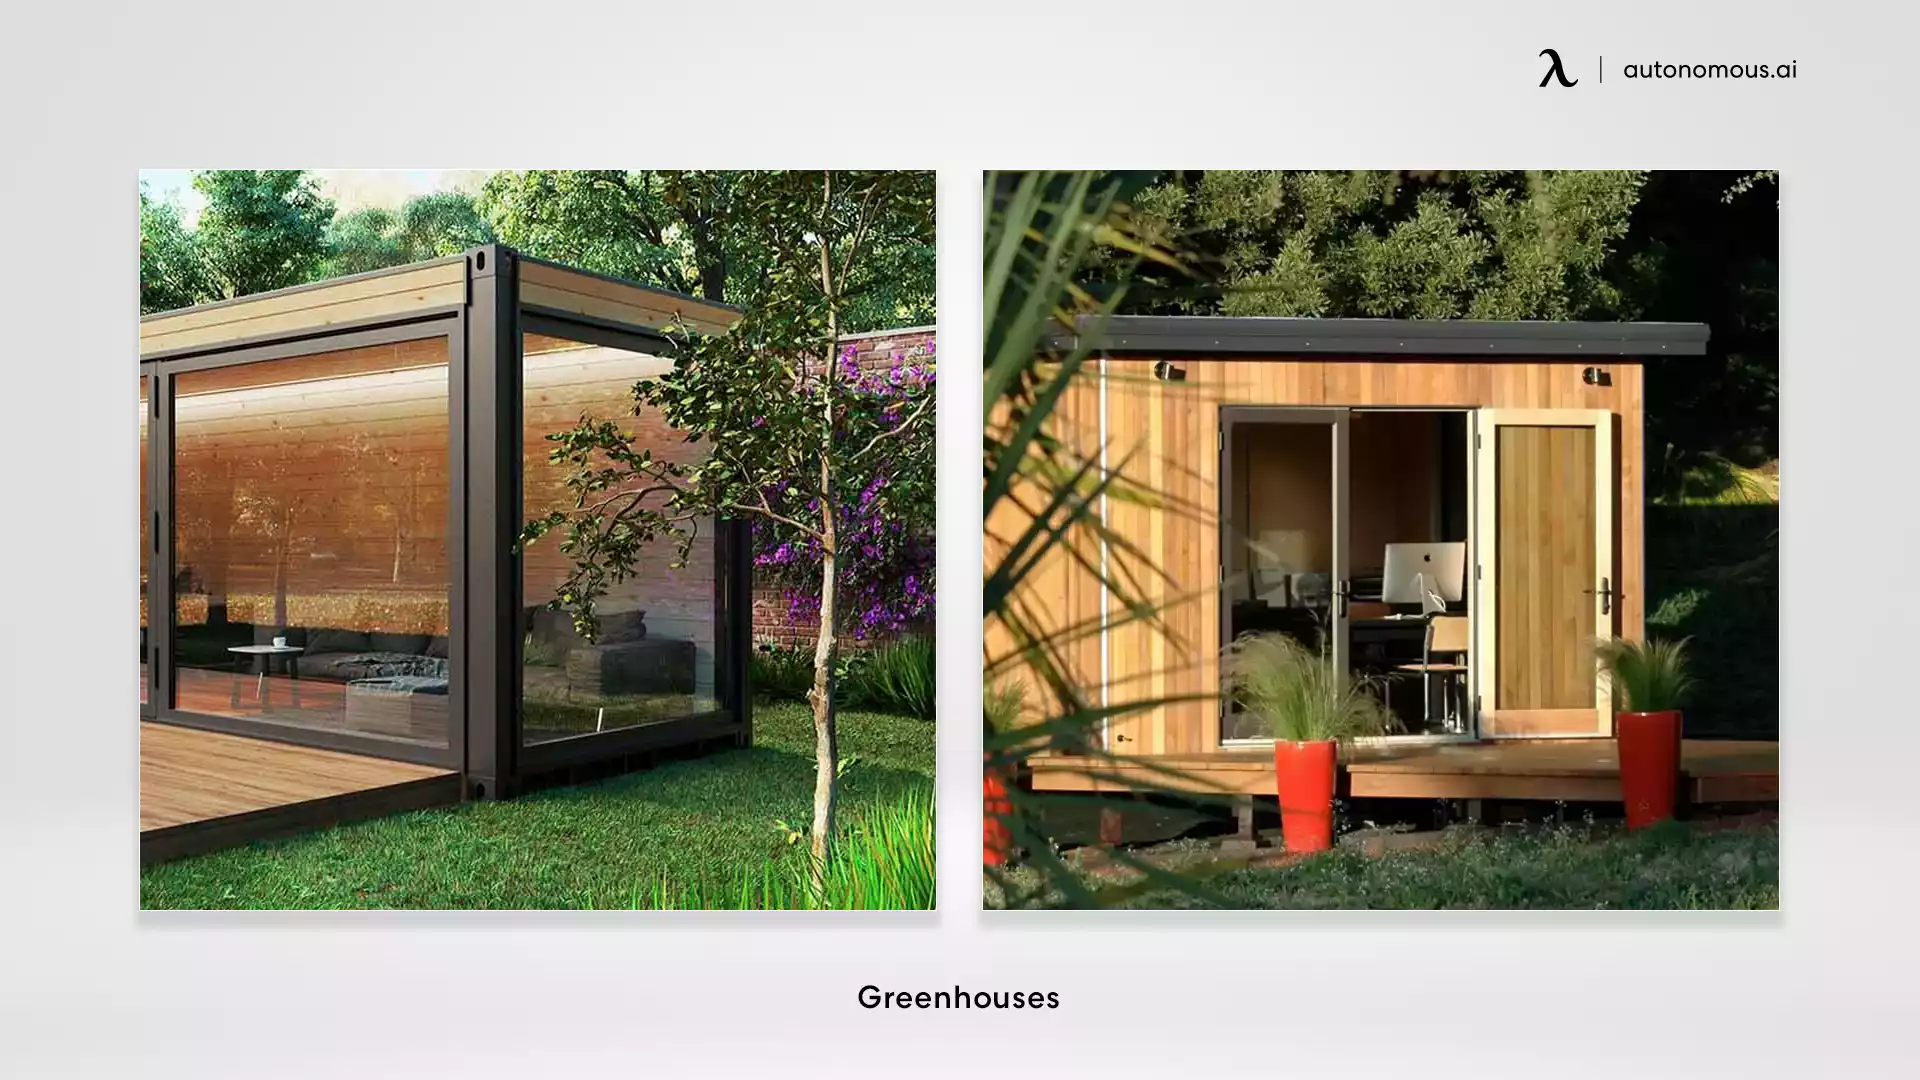 Greenhouses garden office ideas